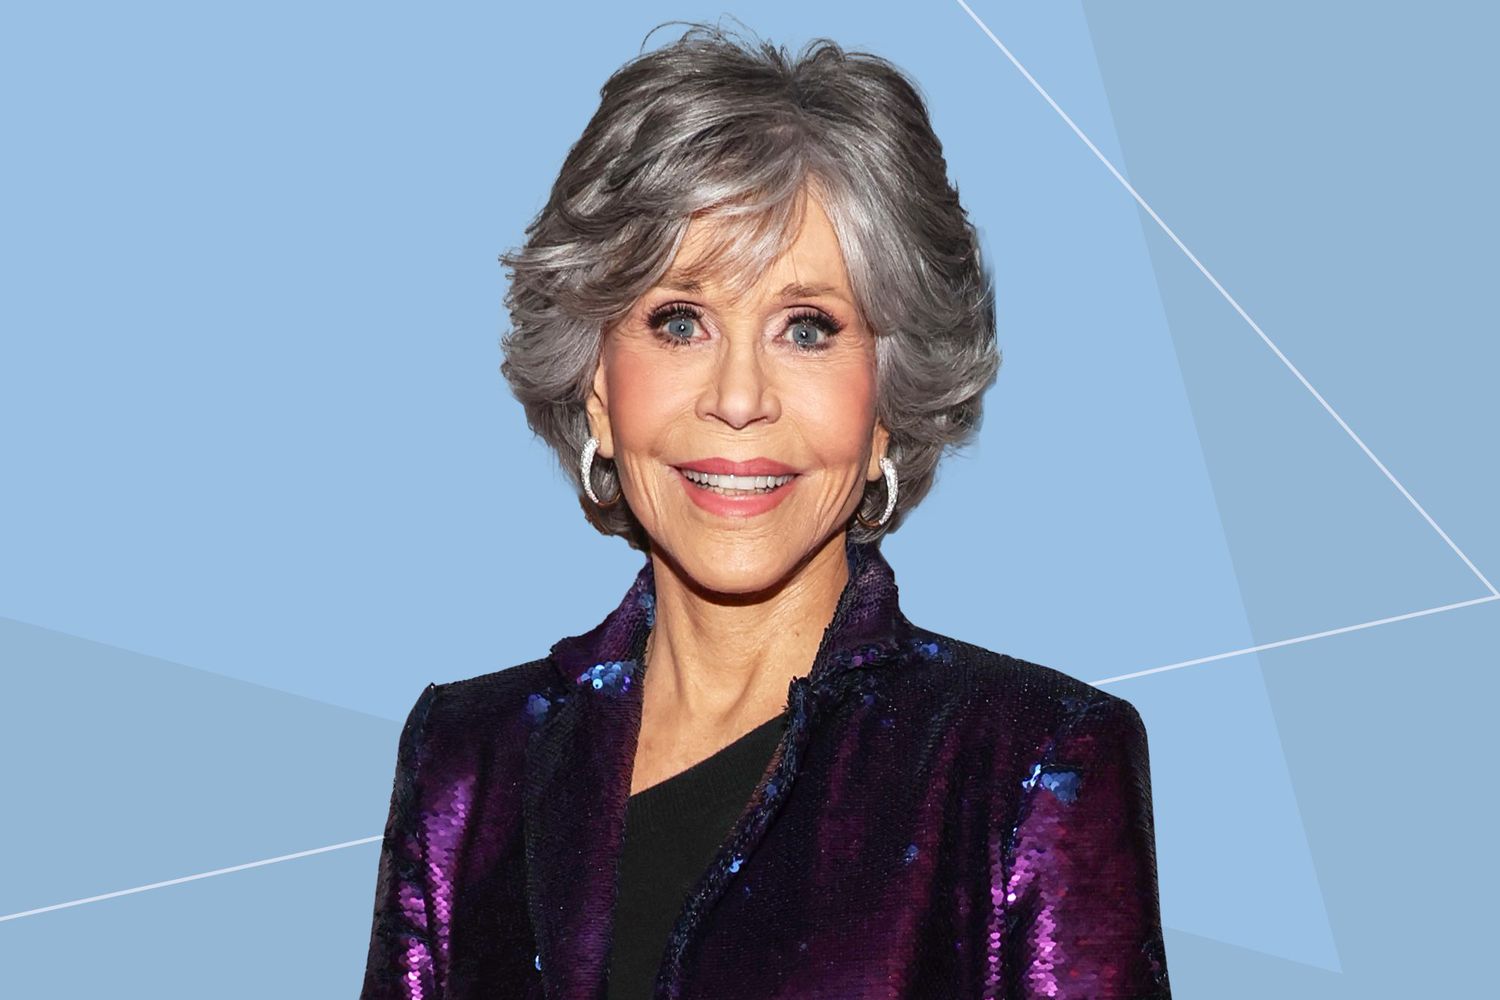 Jane Fonda wearing a purple suit against a blue background